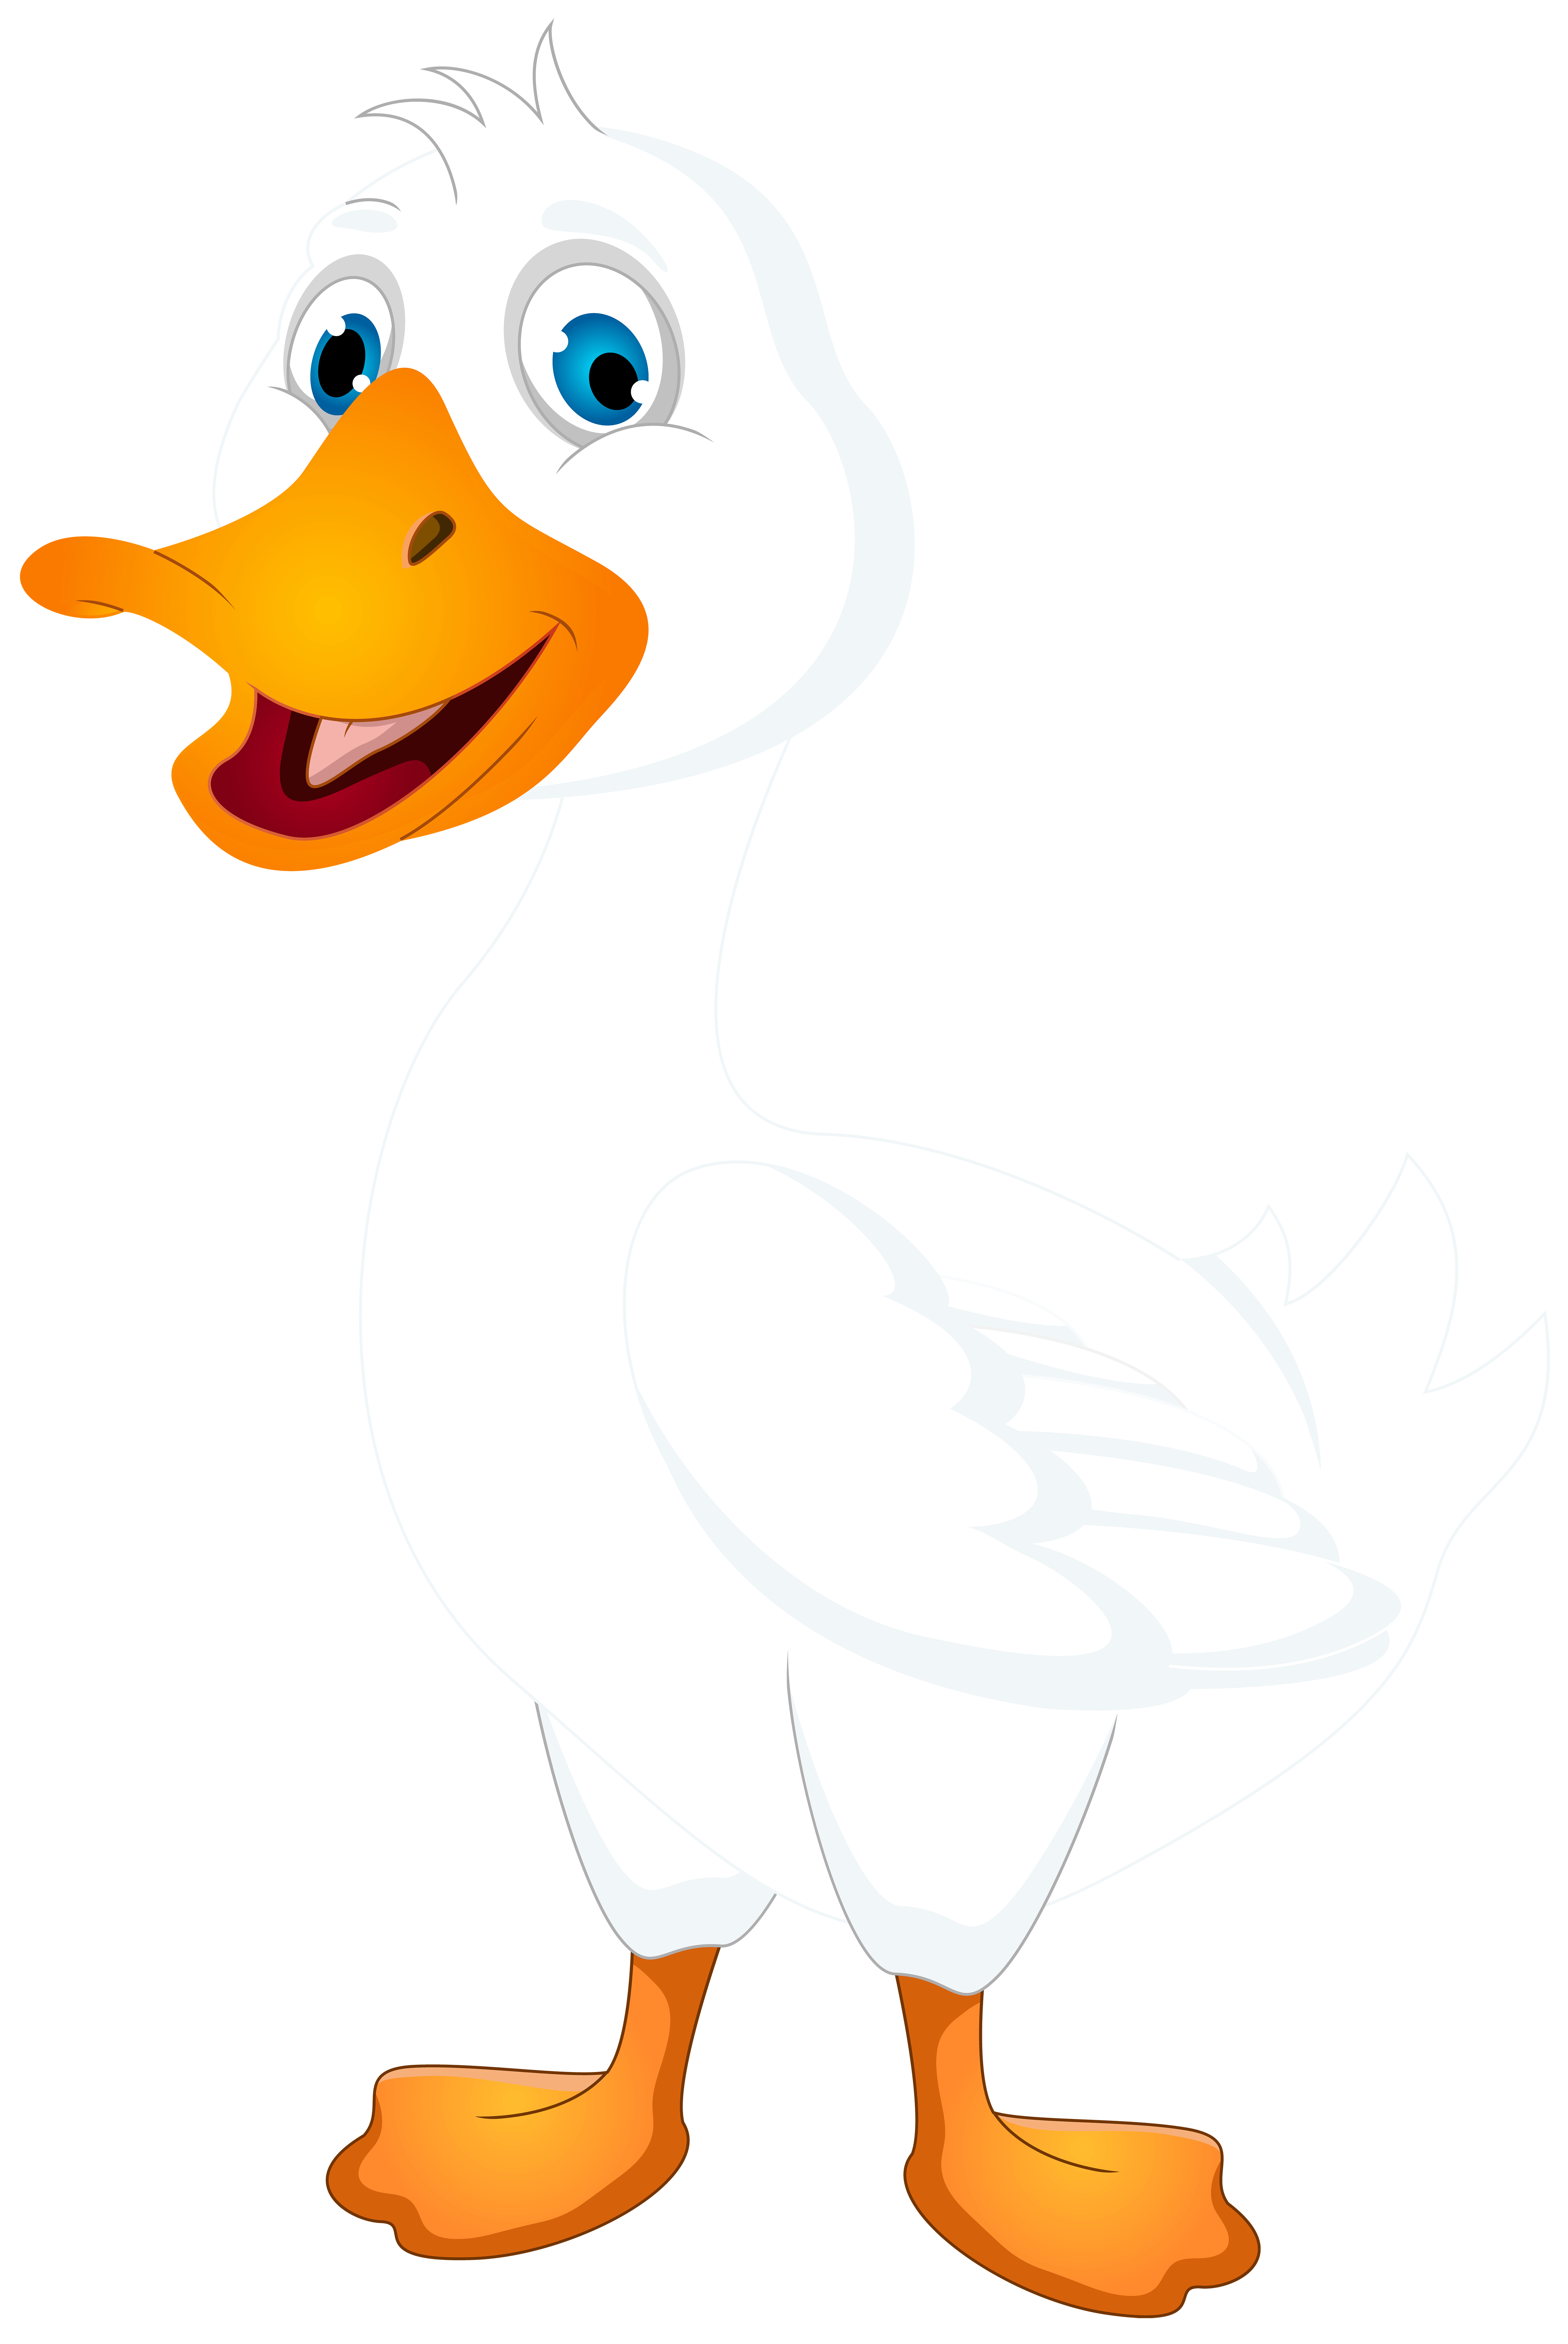 Ducks clipart momma duck. White cliparts zone cartoon